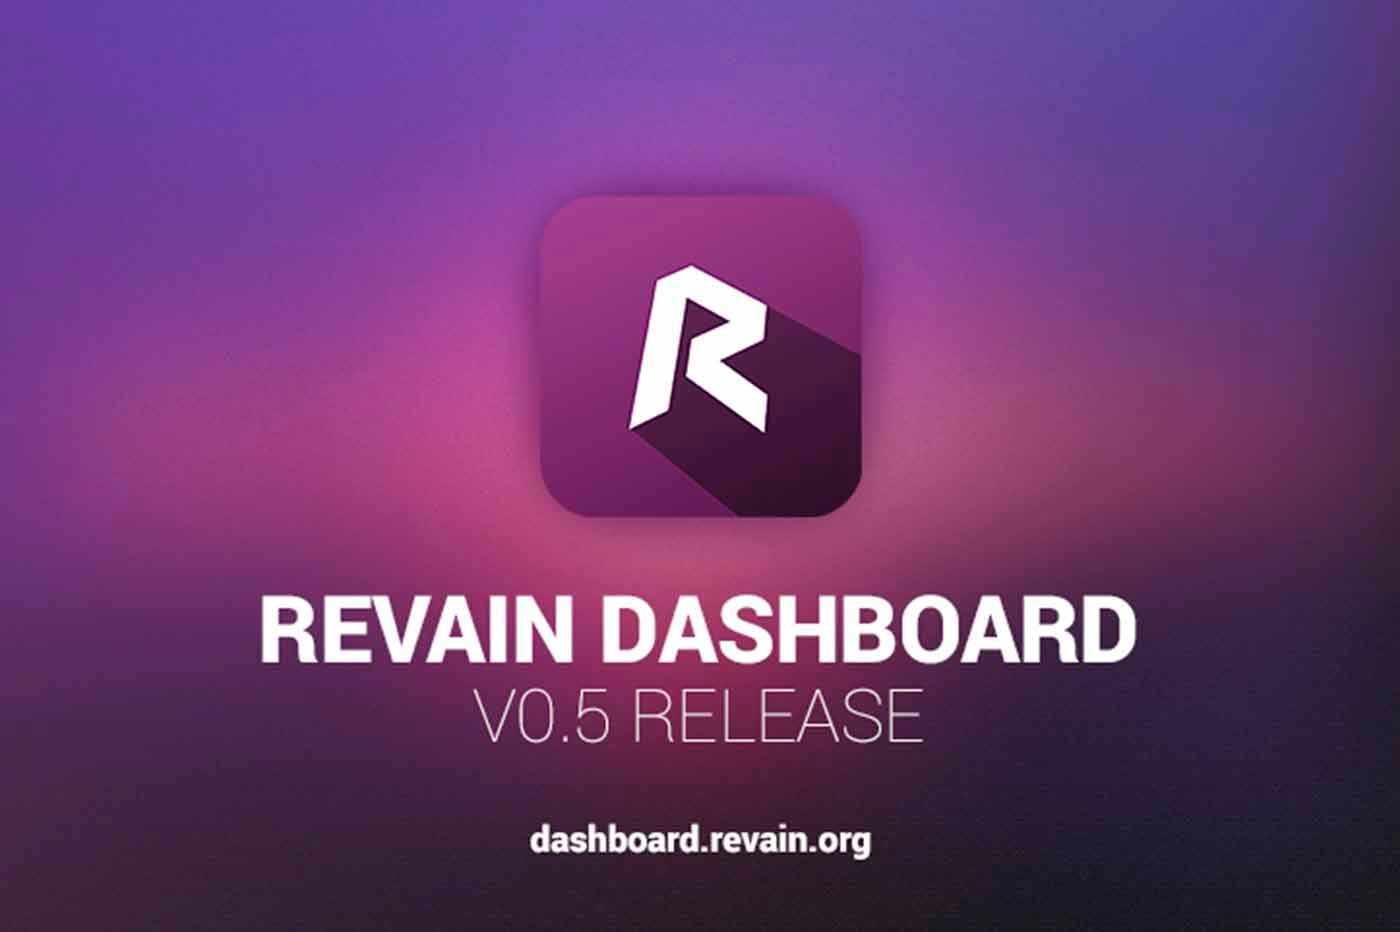 Revain releases version 0.5